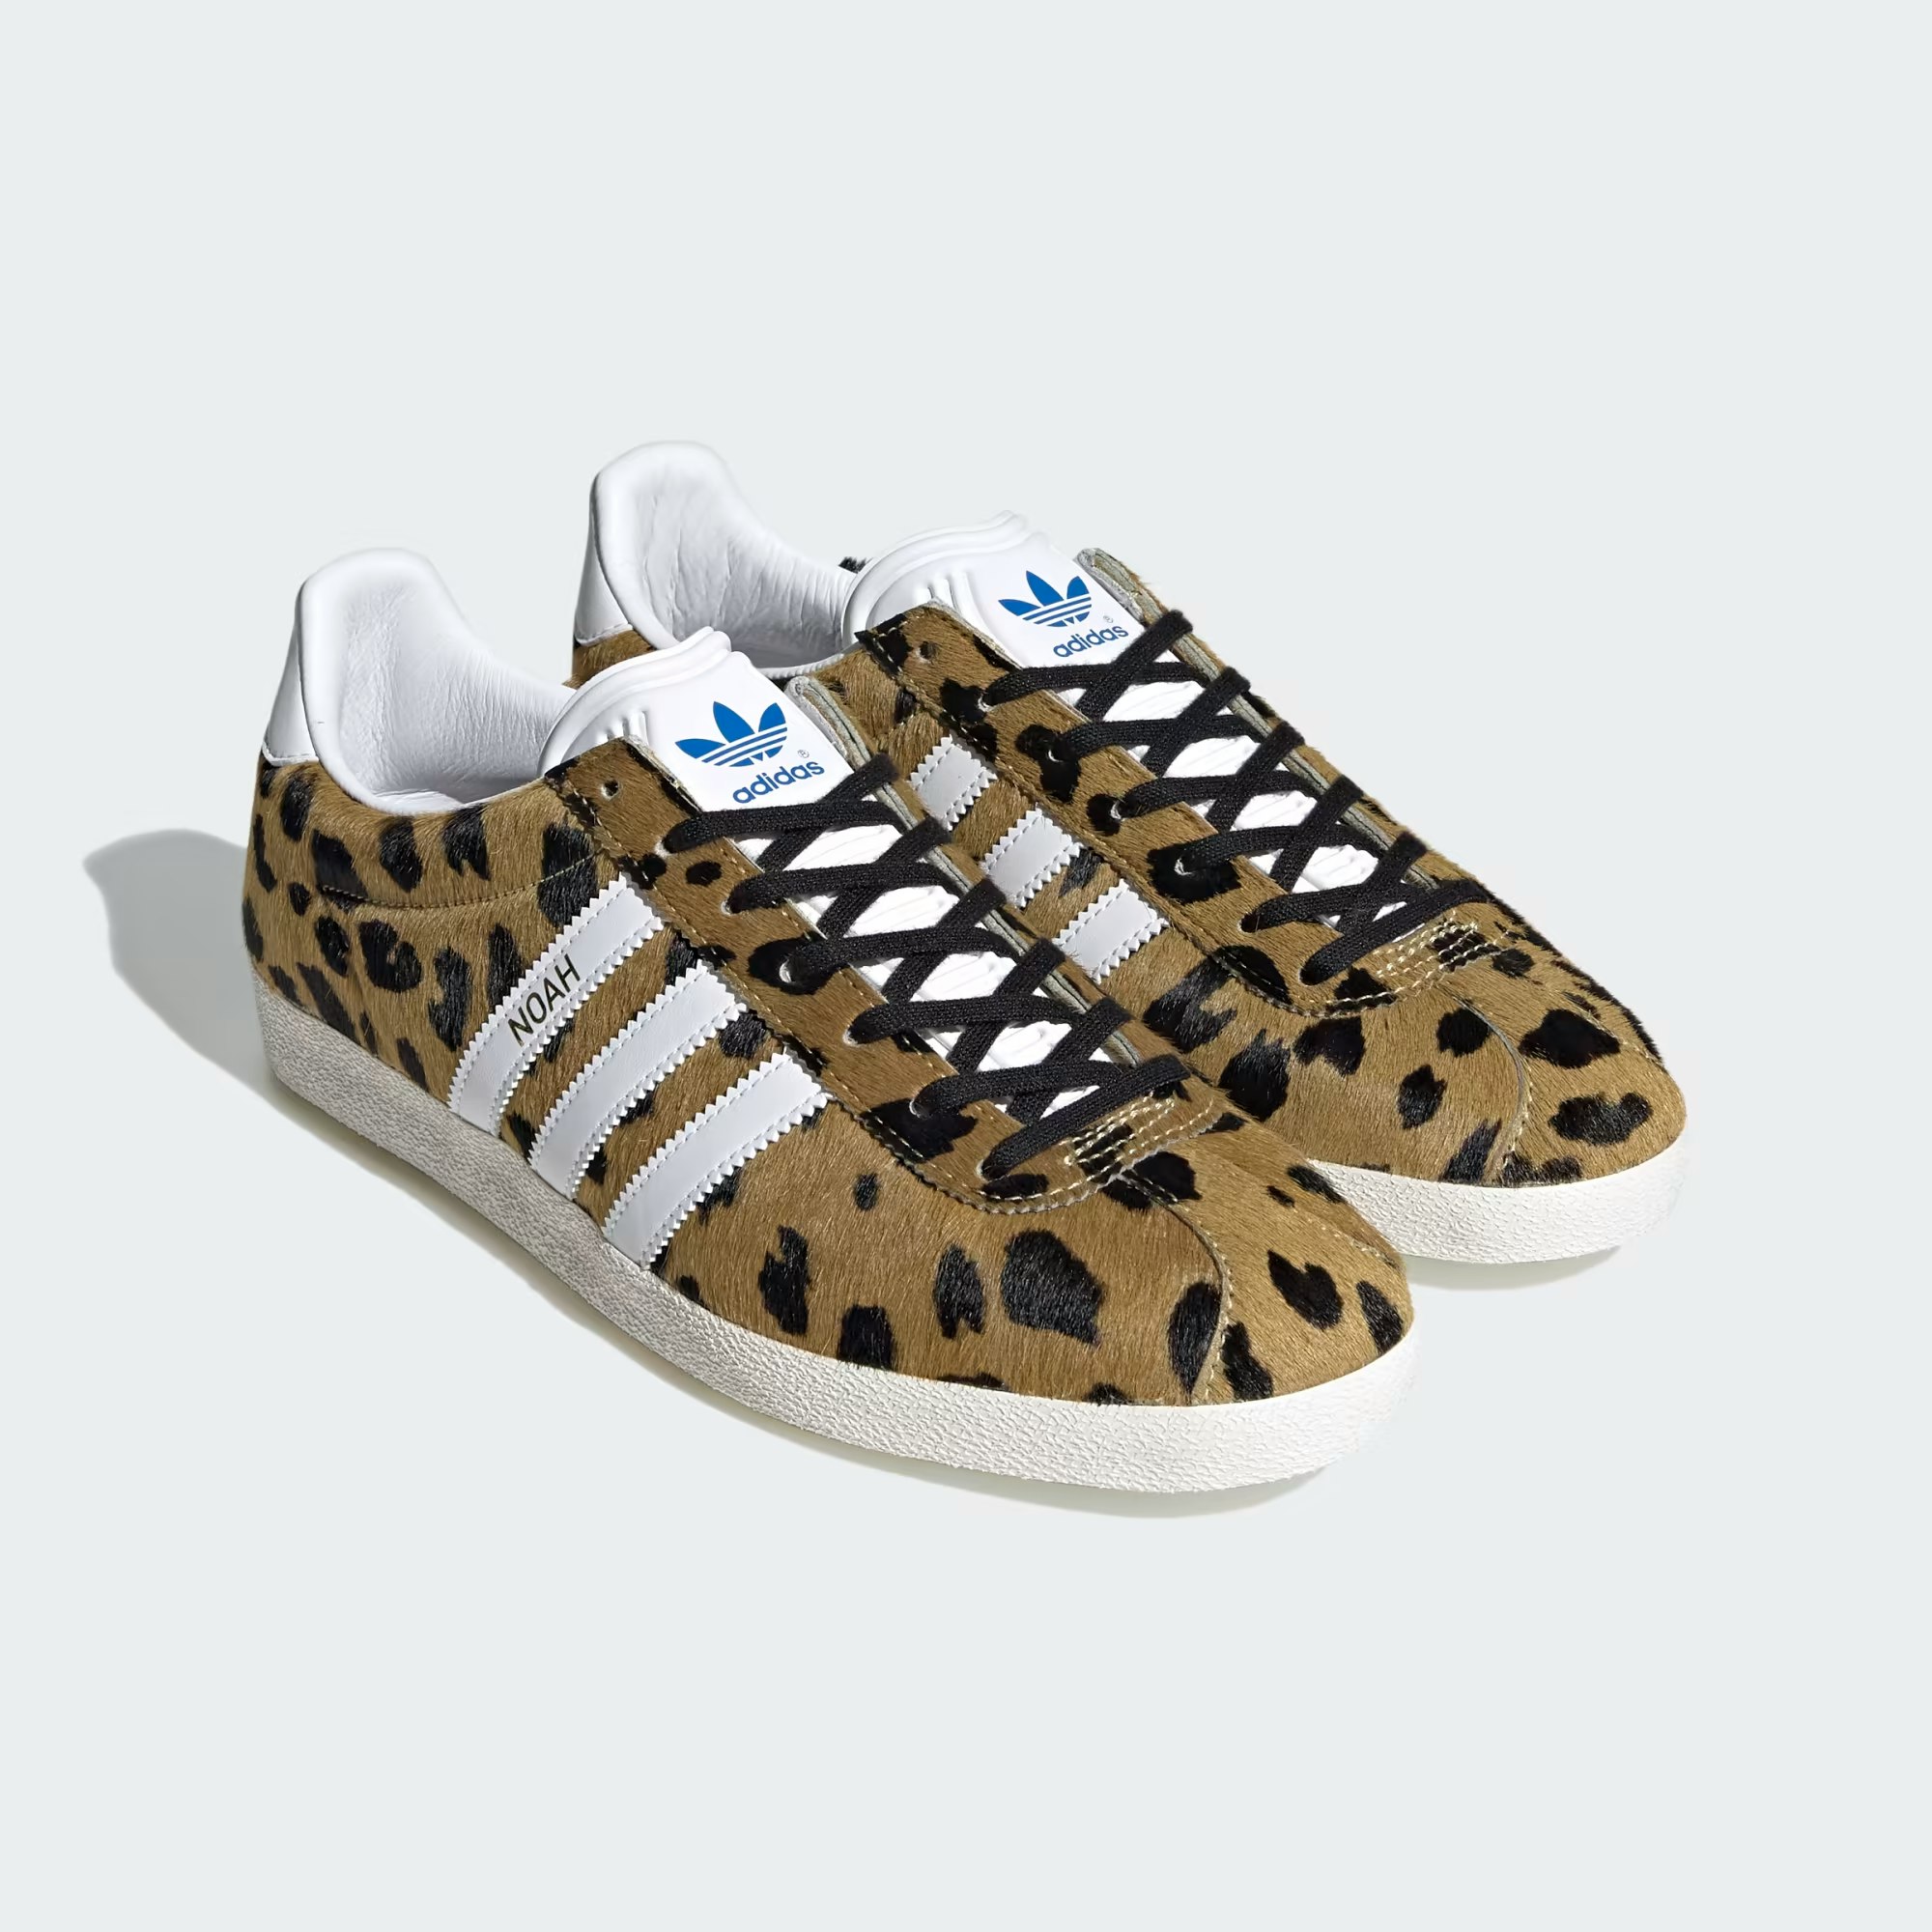 NOAH x adidas Gazelle "Cheetah" 